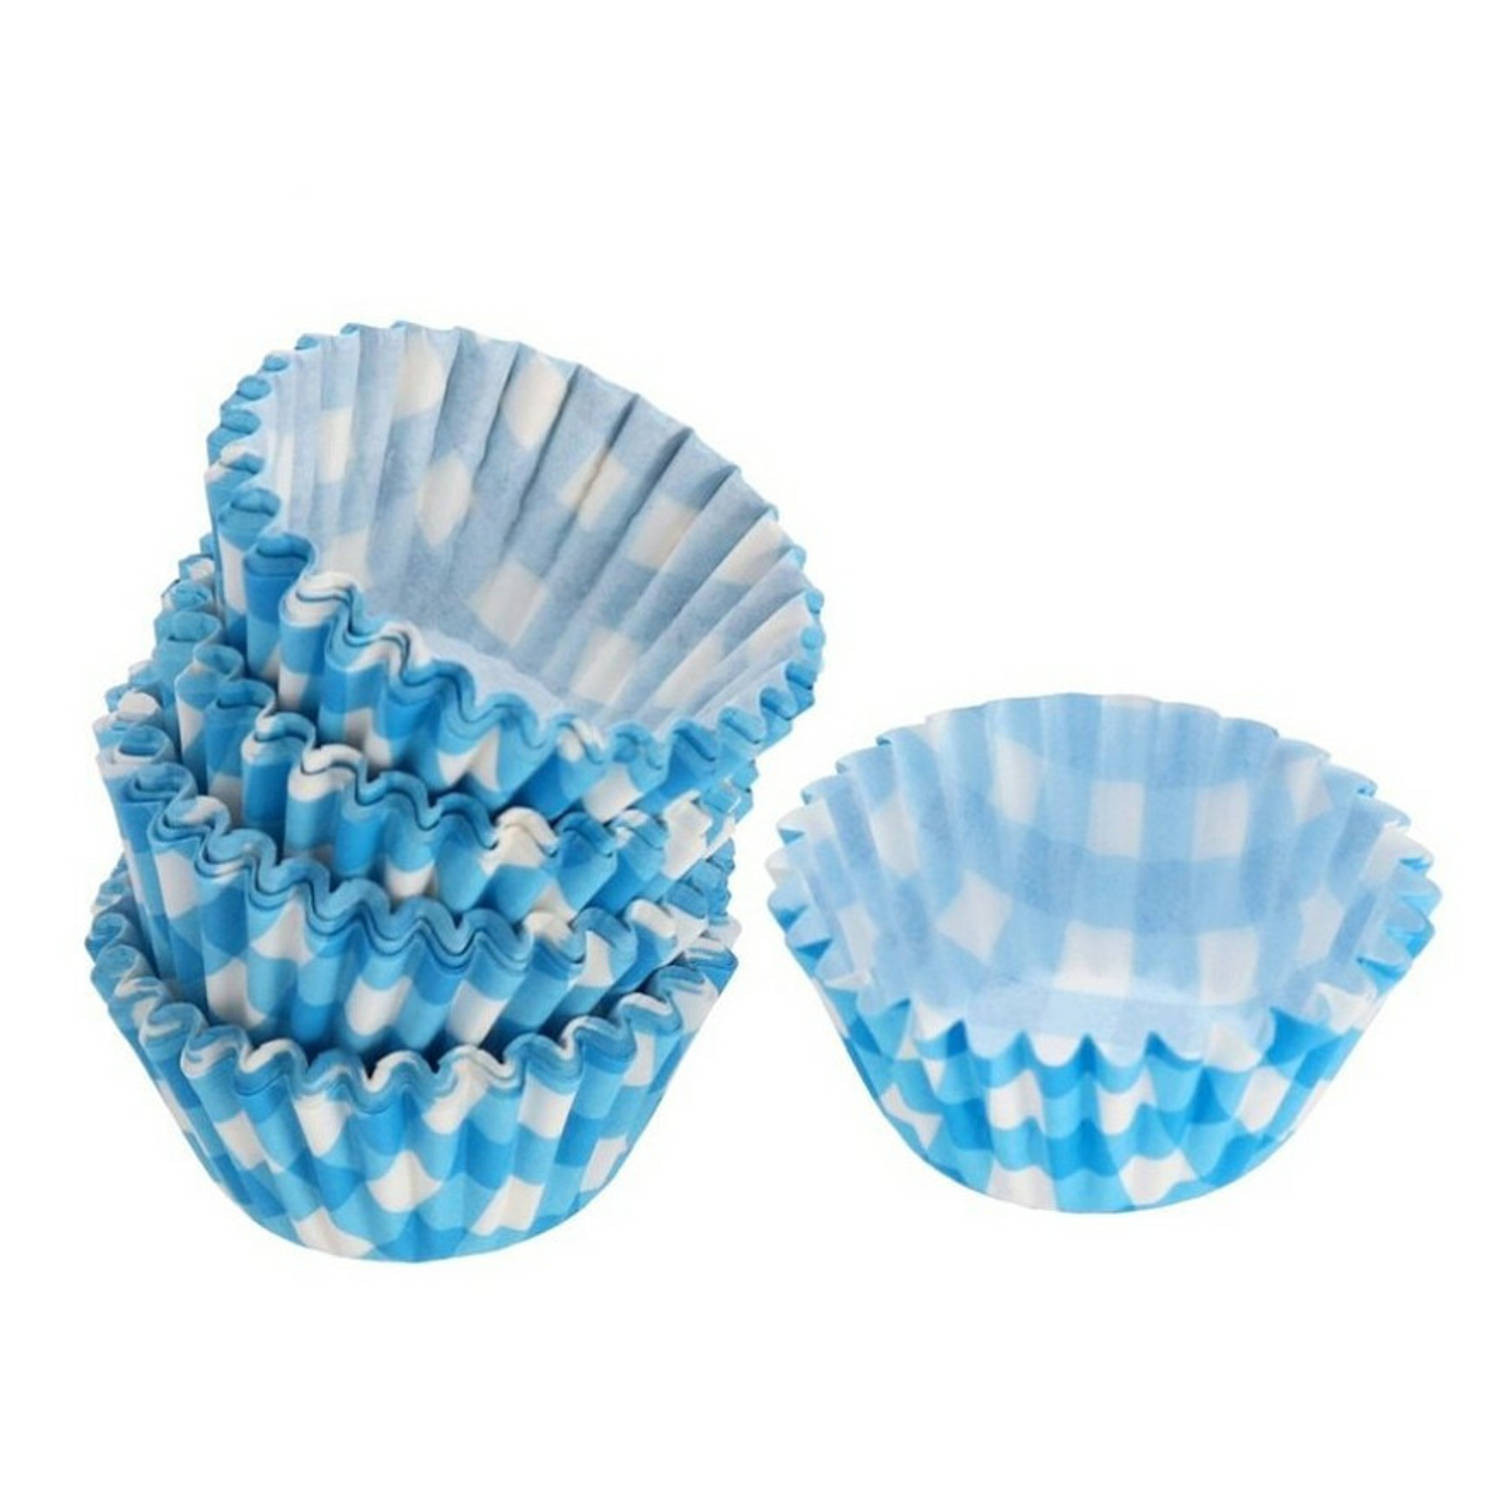 180x Mini muffin en cupcake vormpjes blauw papier 4 x 4 x 2 cm - Muffinvormen / cupcakevormen